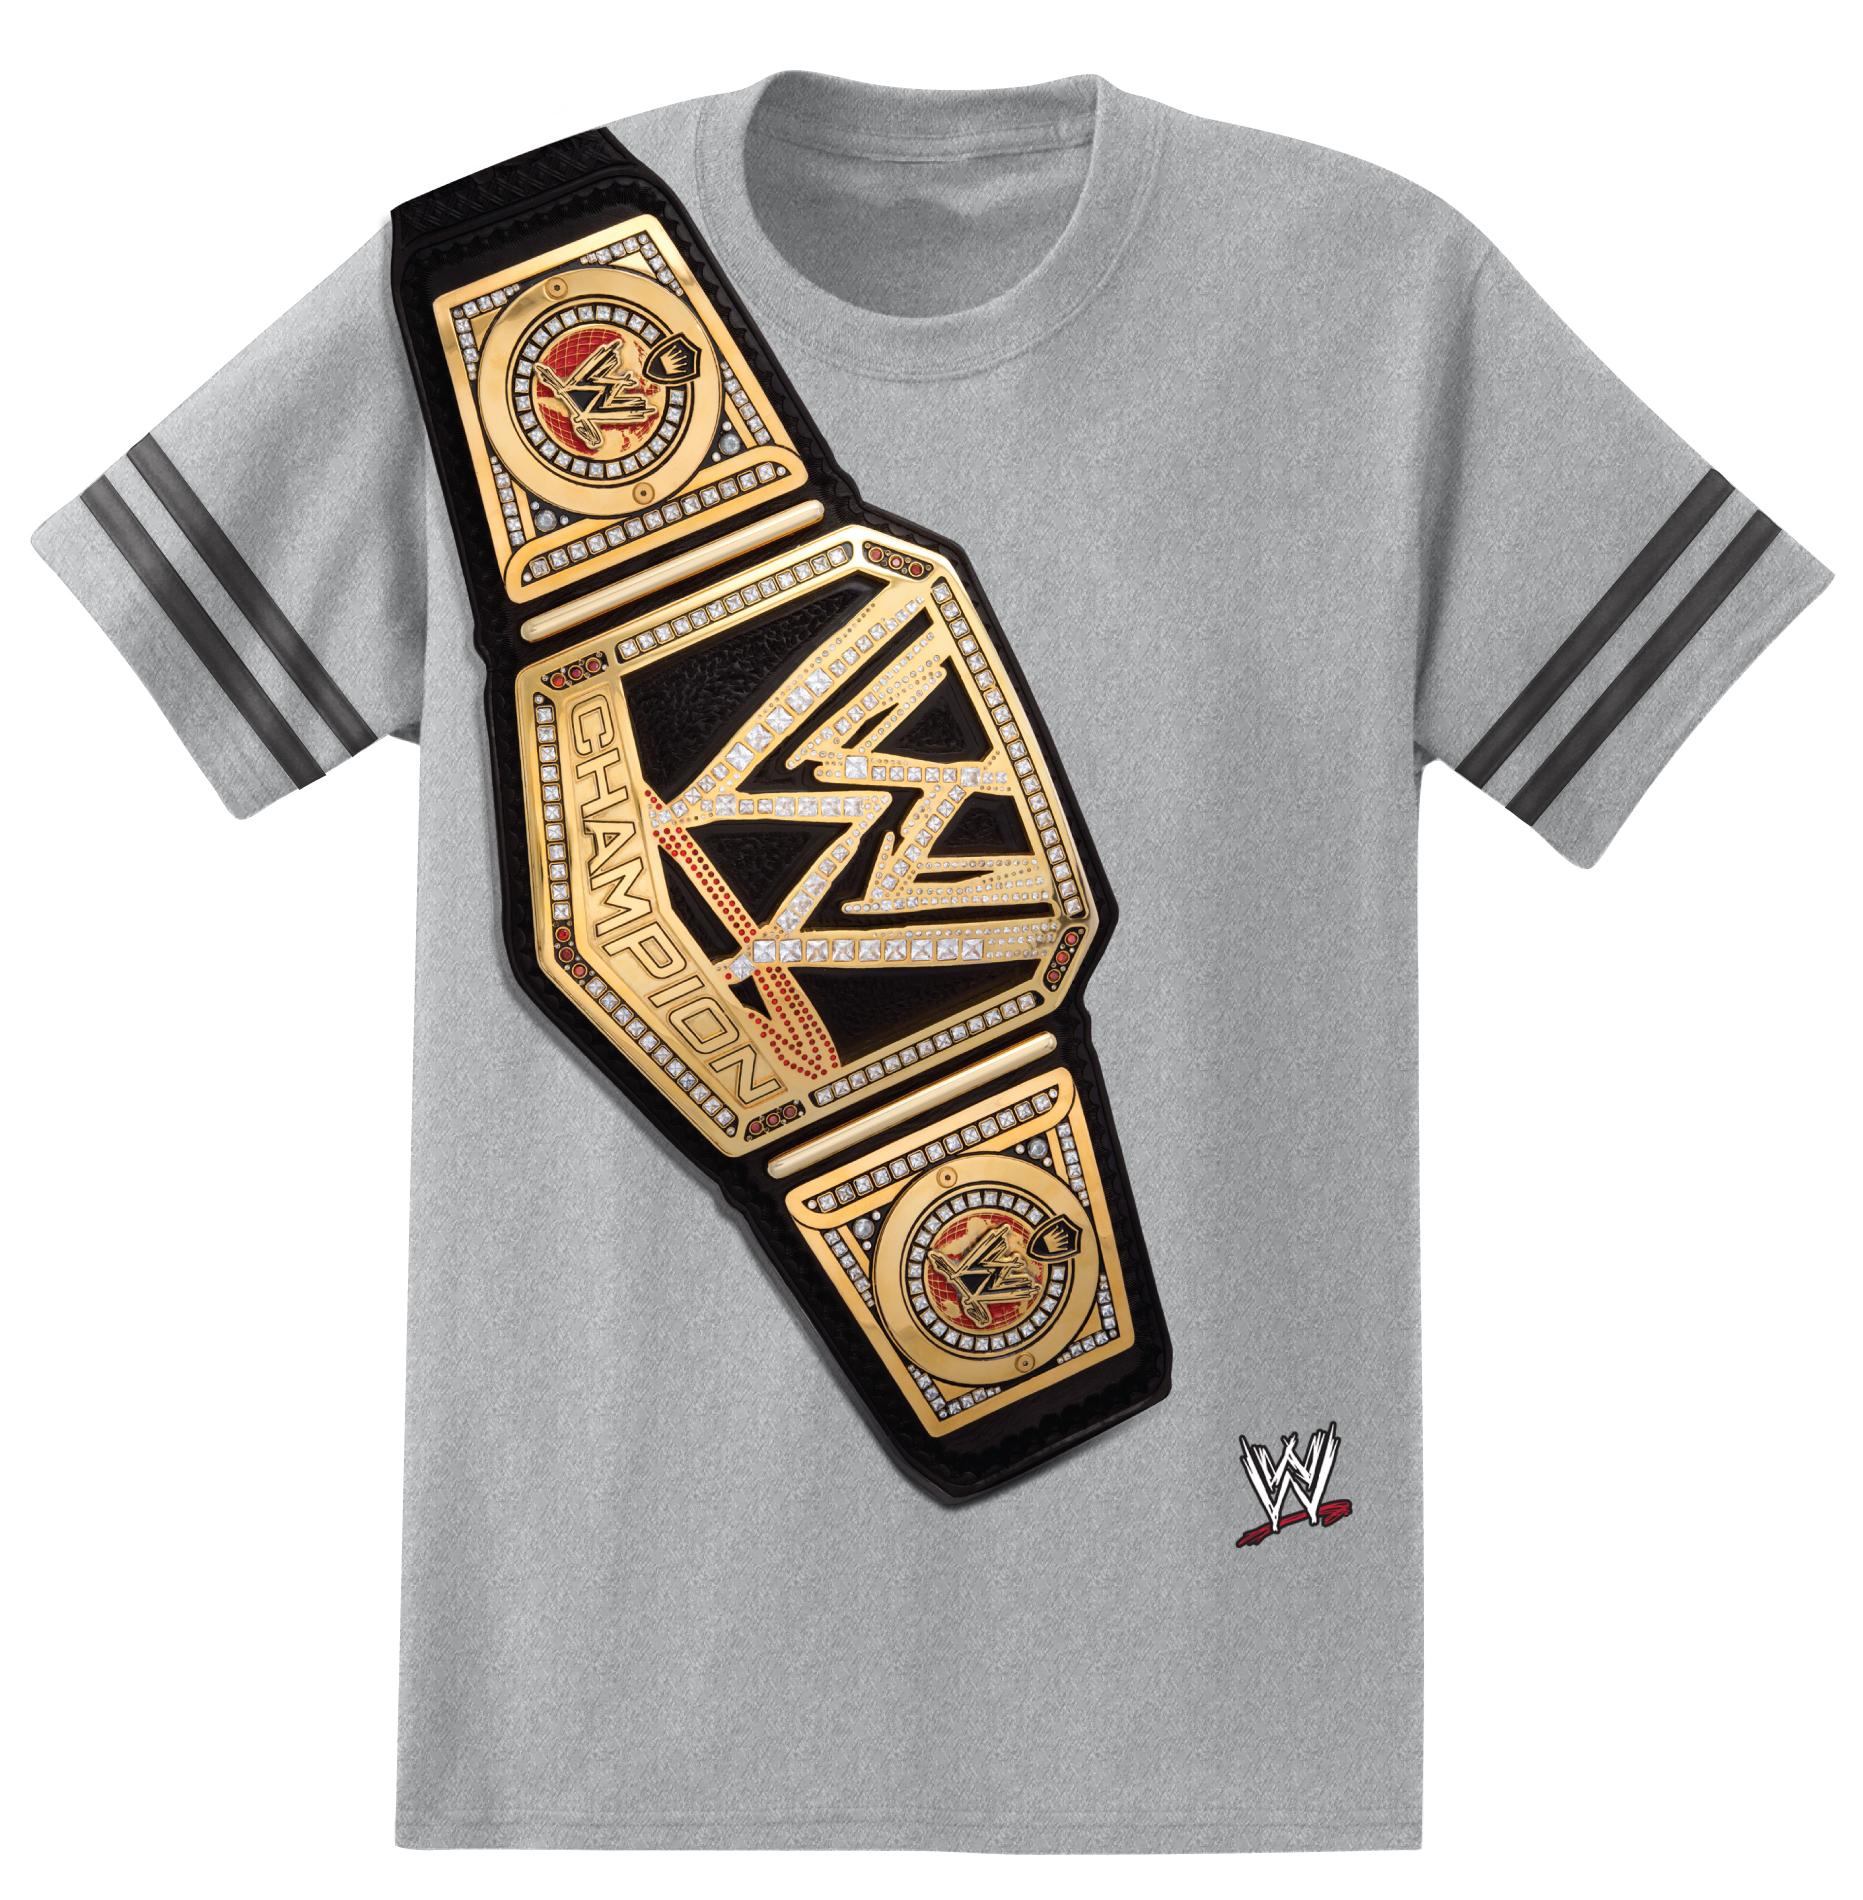 WWE Boy's Graphic T-Shirt - WrestleMania Belt